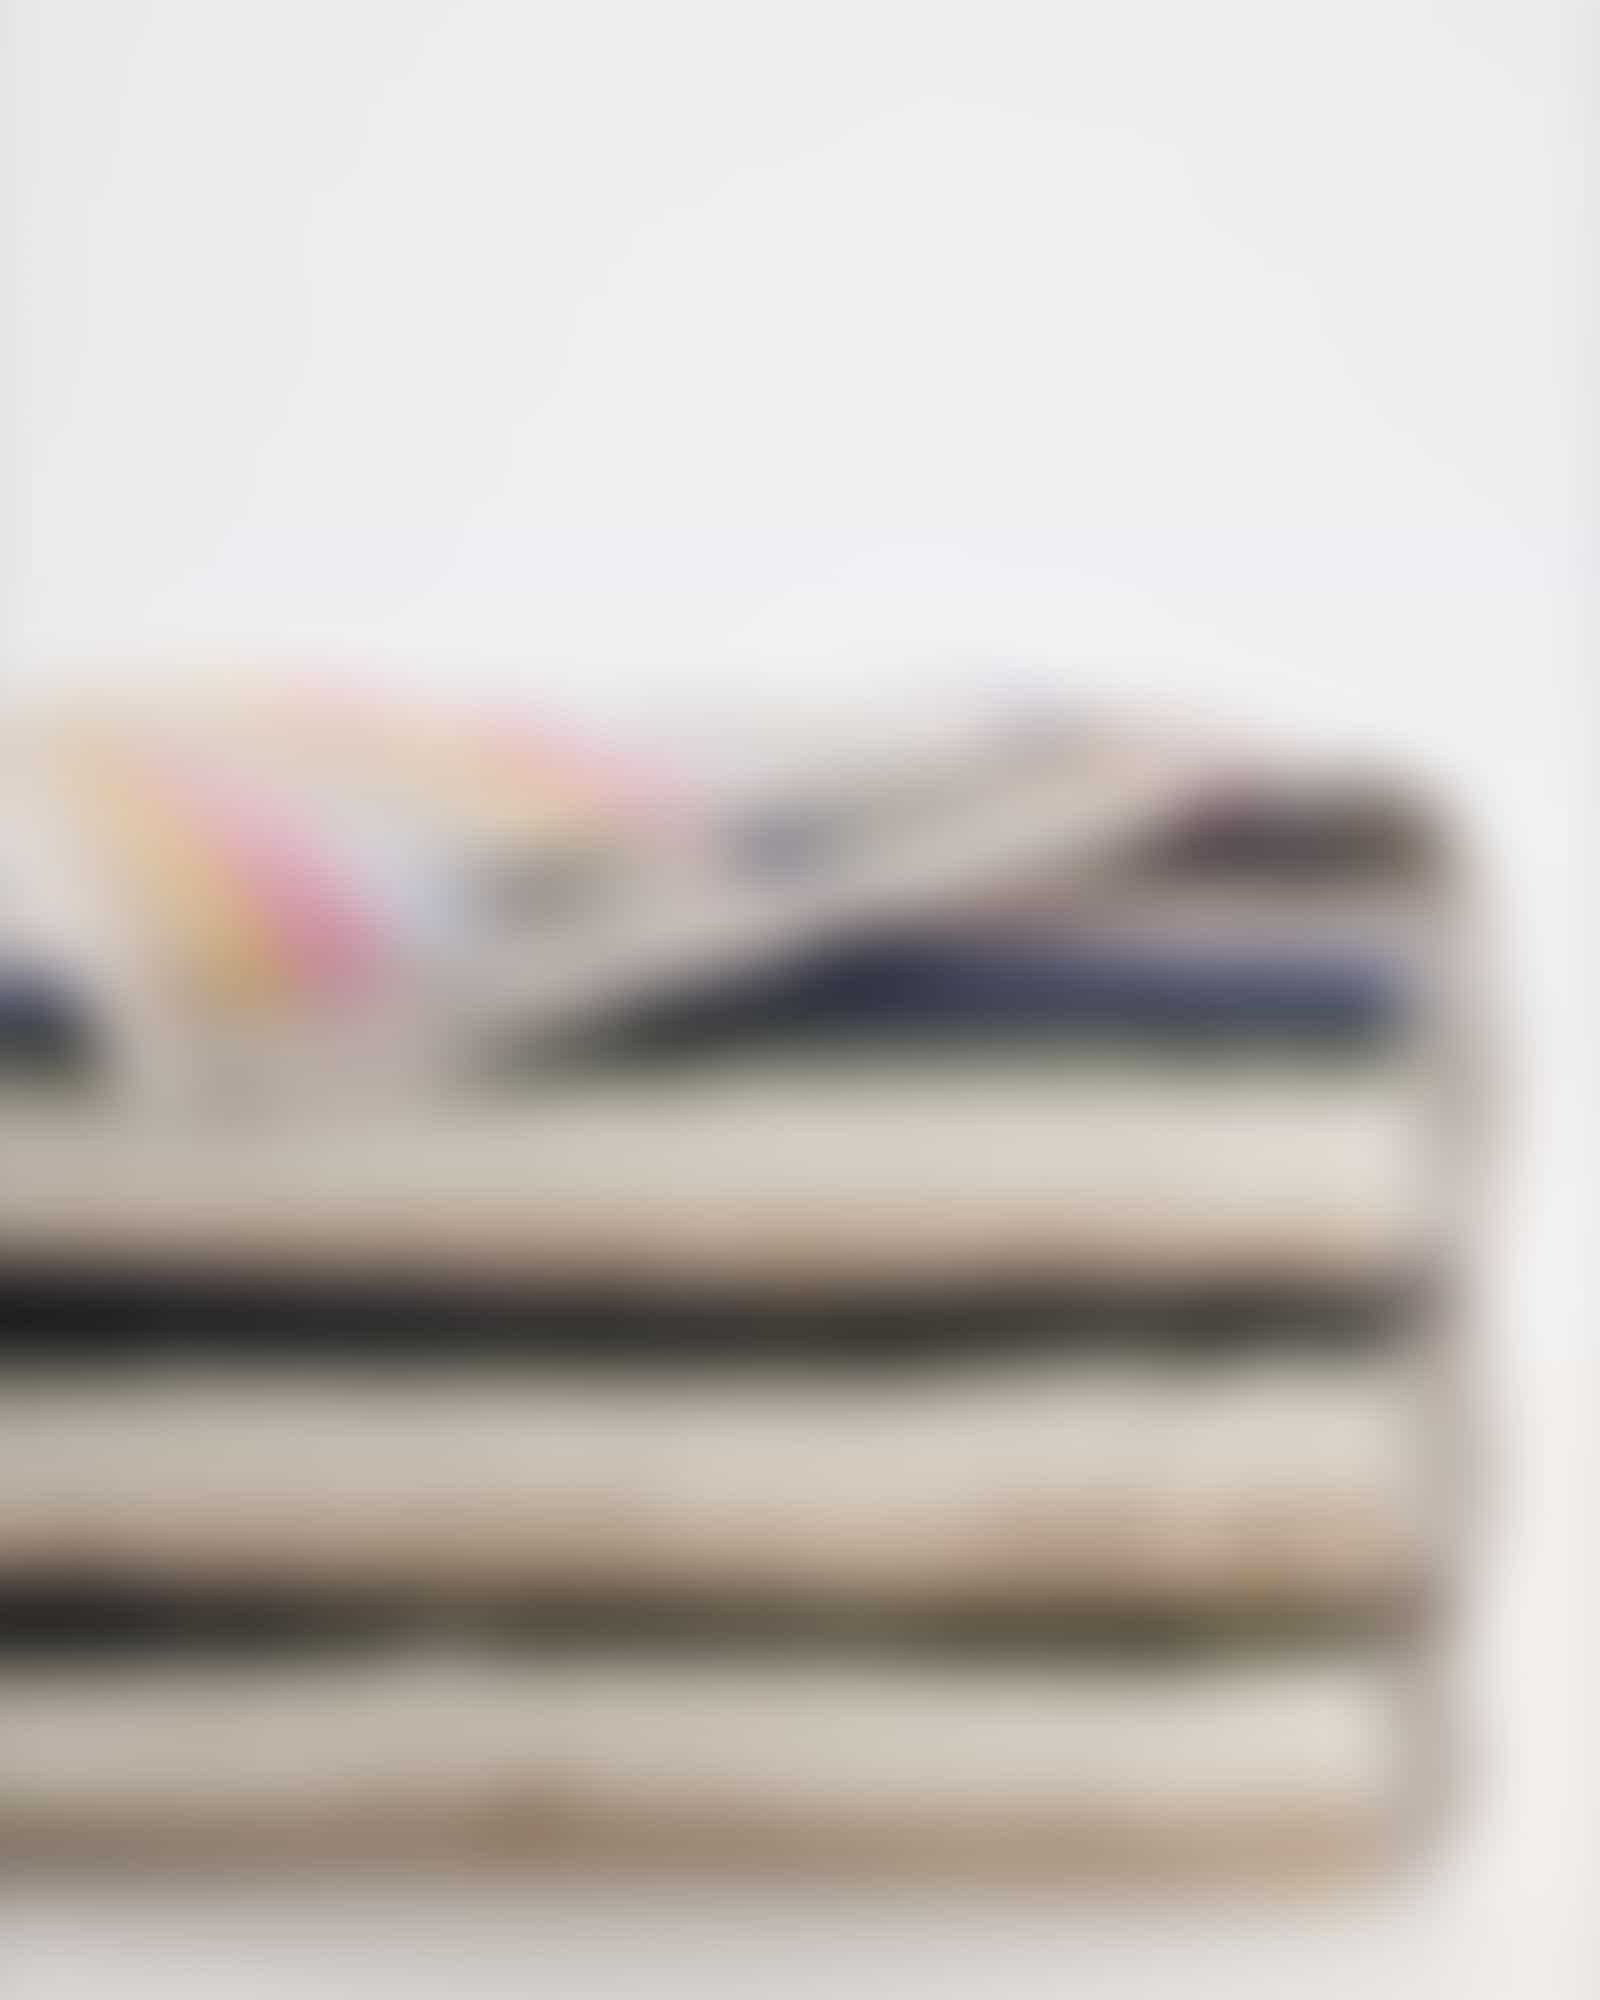 Villeroy &amp; Boch Handtücher Coordinates Stripes 2551 - Farbe: multicolor - 12 - Duschtuch 80x150 cm